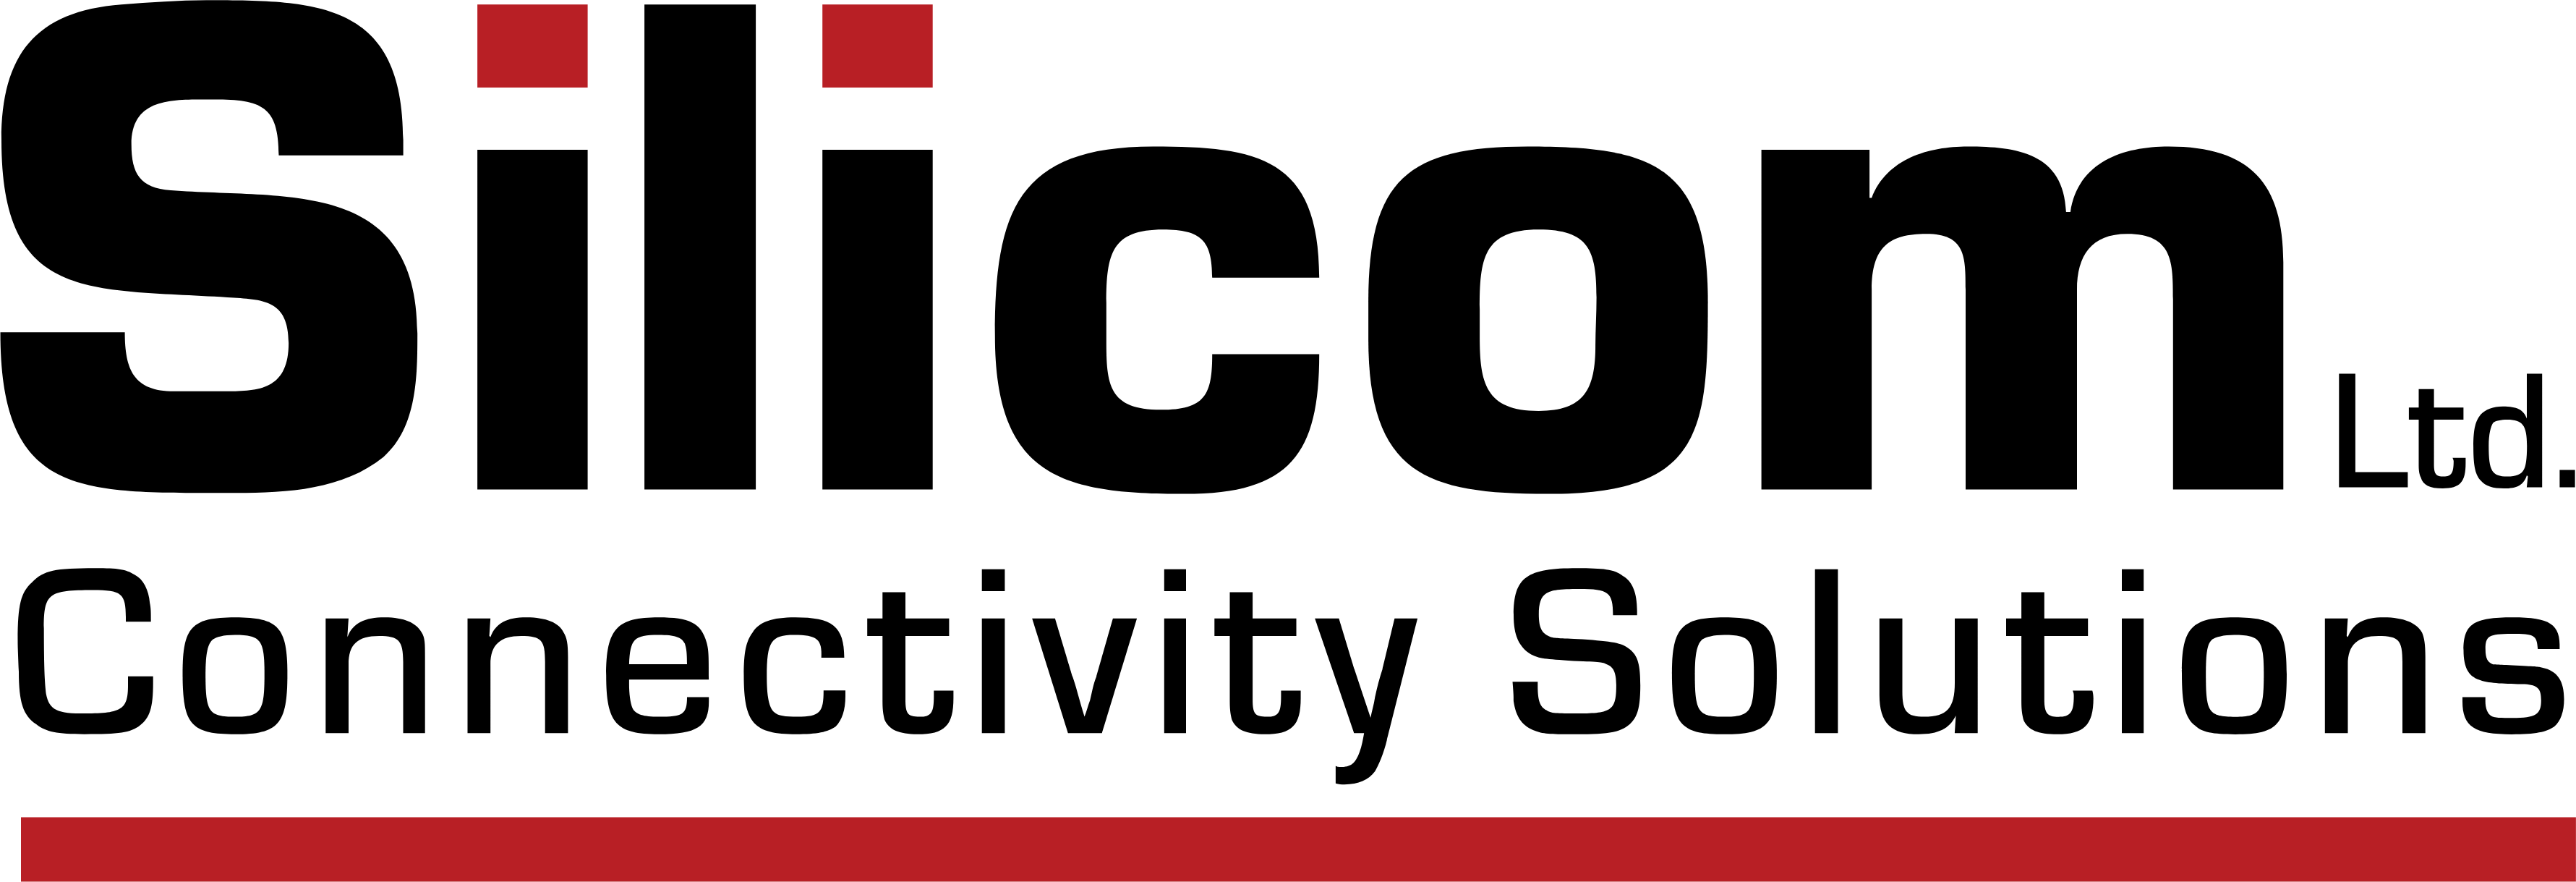 Silicom logo large (transparent PNG)